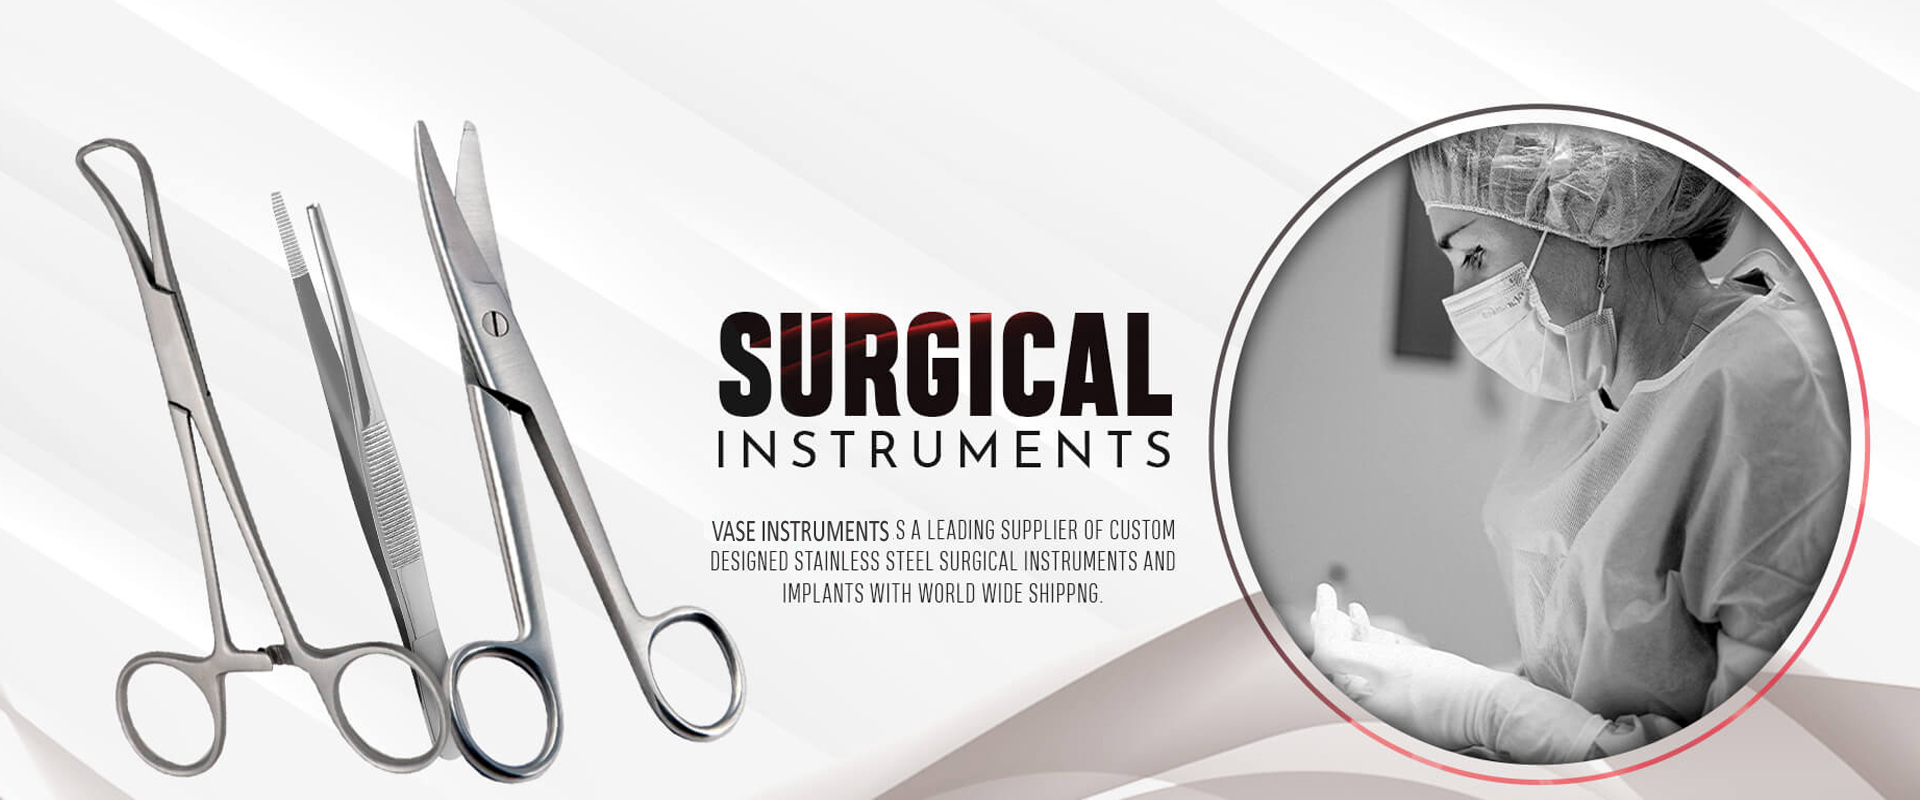 https://vaseinstruments.com/source/banner/main-new/surgical-instruments-2.jpg